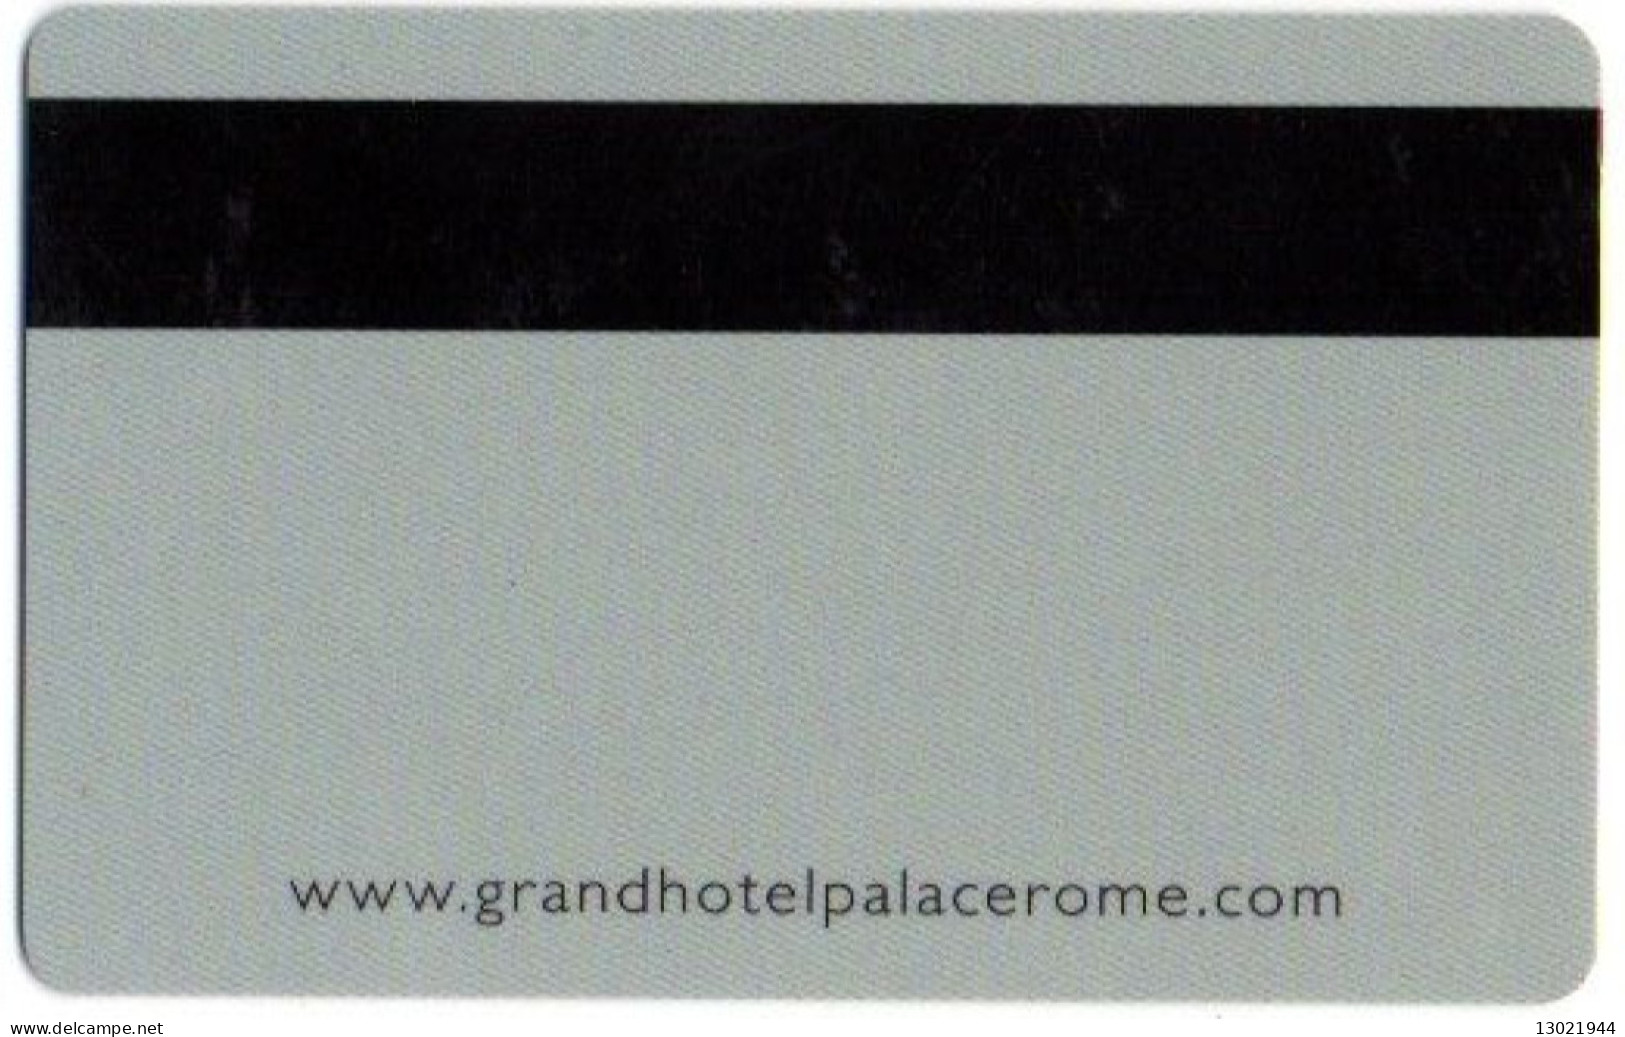 ITALIA  KEY HOTEL   Grand Hotel Palace Rome - Cartes D'hotel